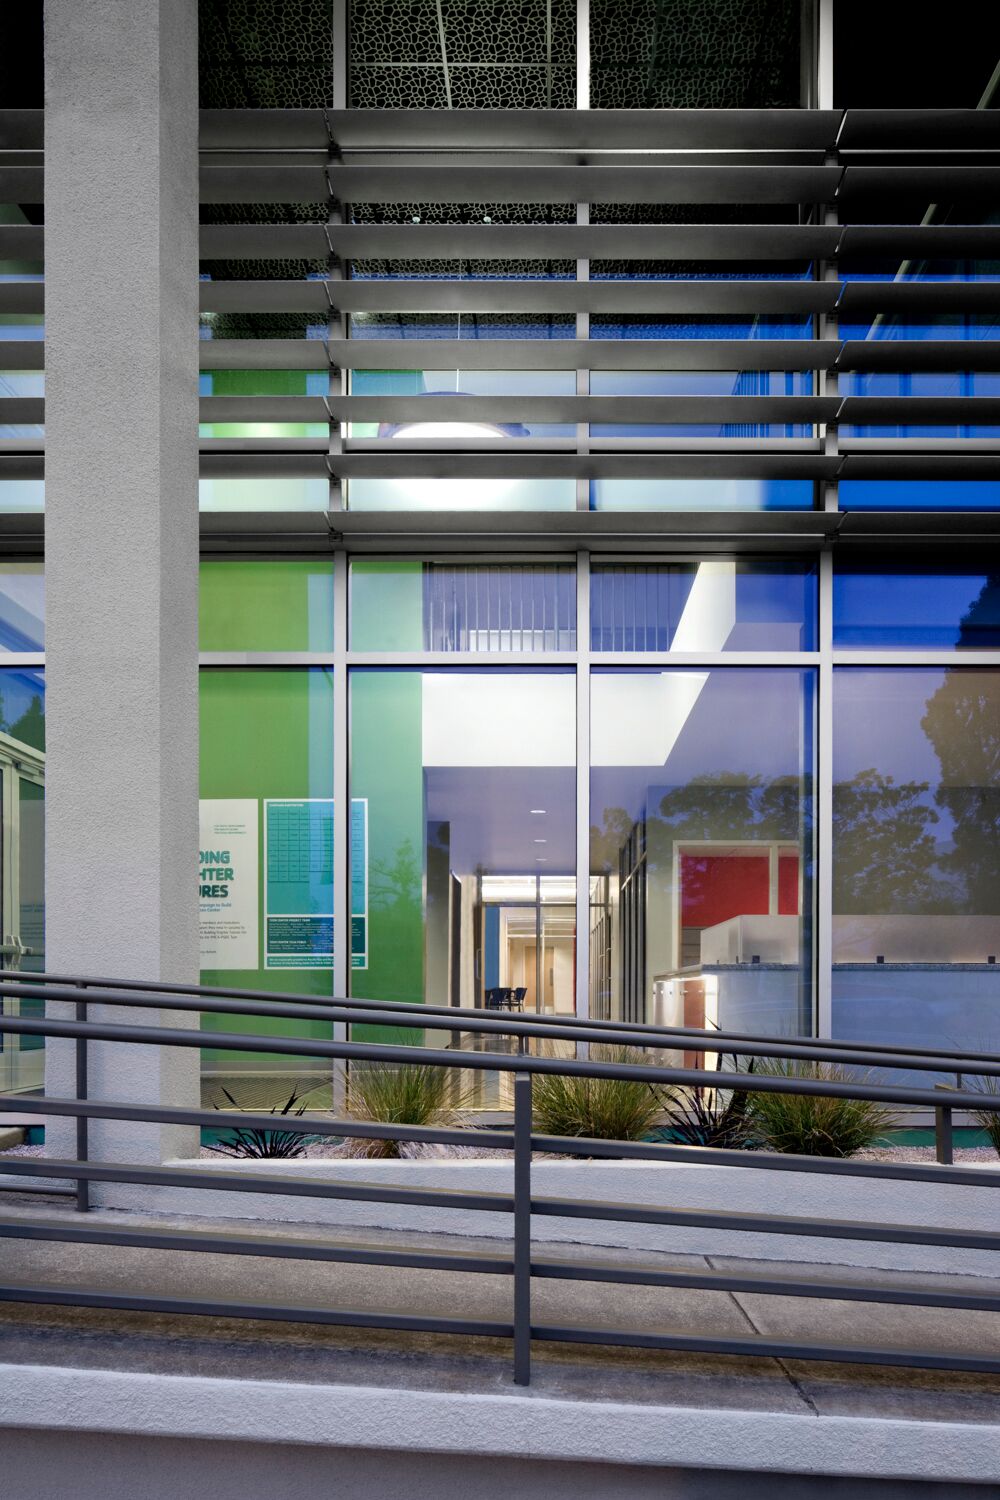 Berkeley YMCA - PG&E Teen Center, Berkeley, California by Noll & Tam Architects